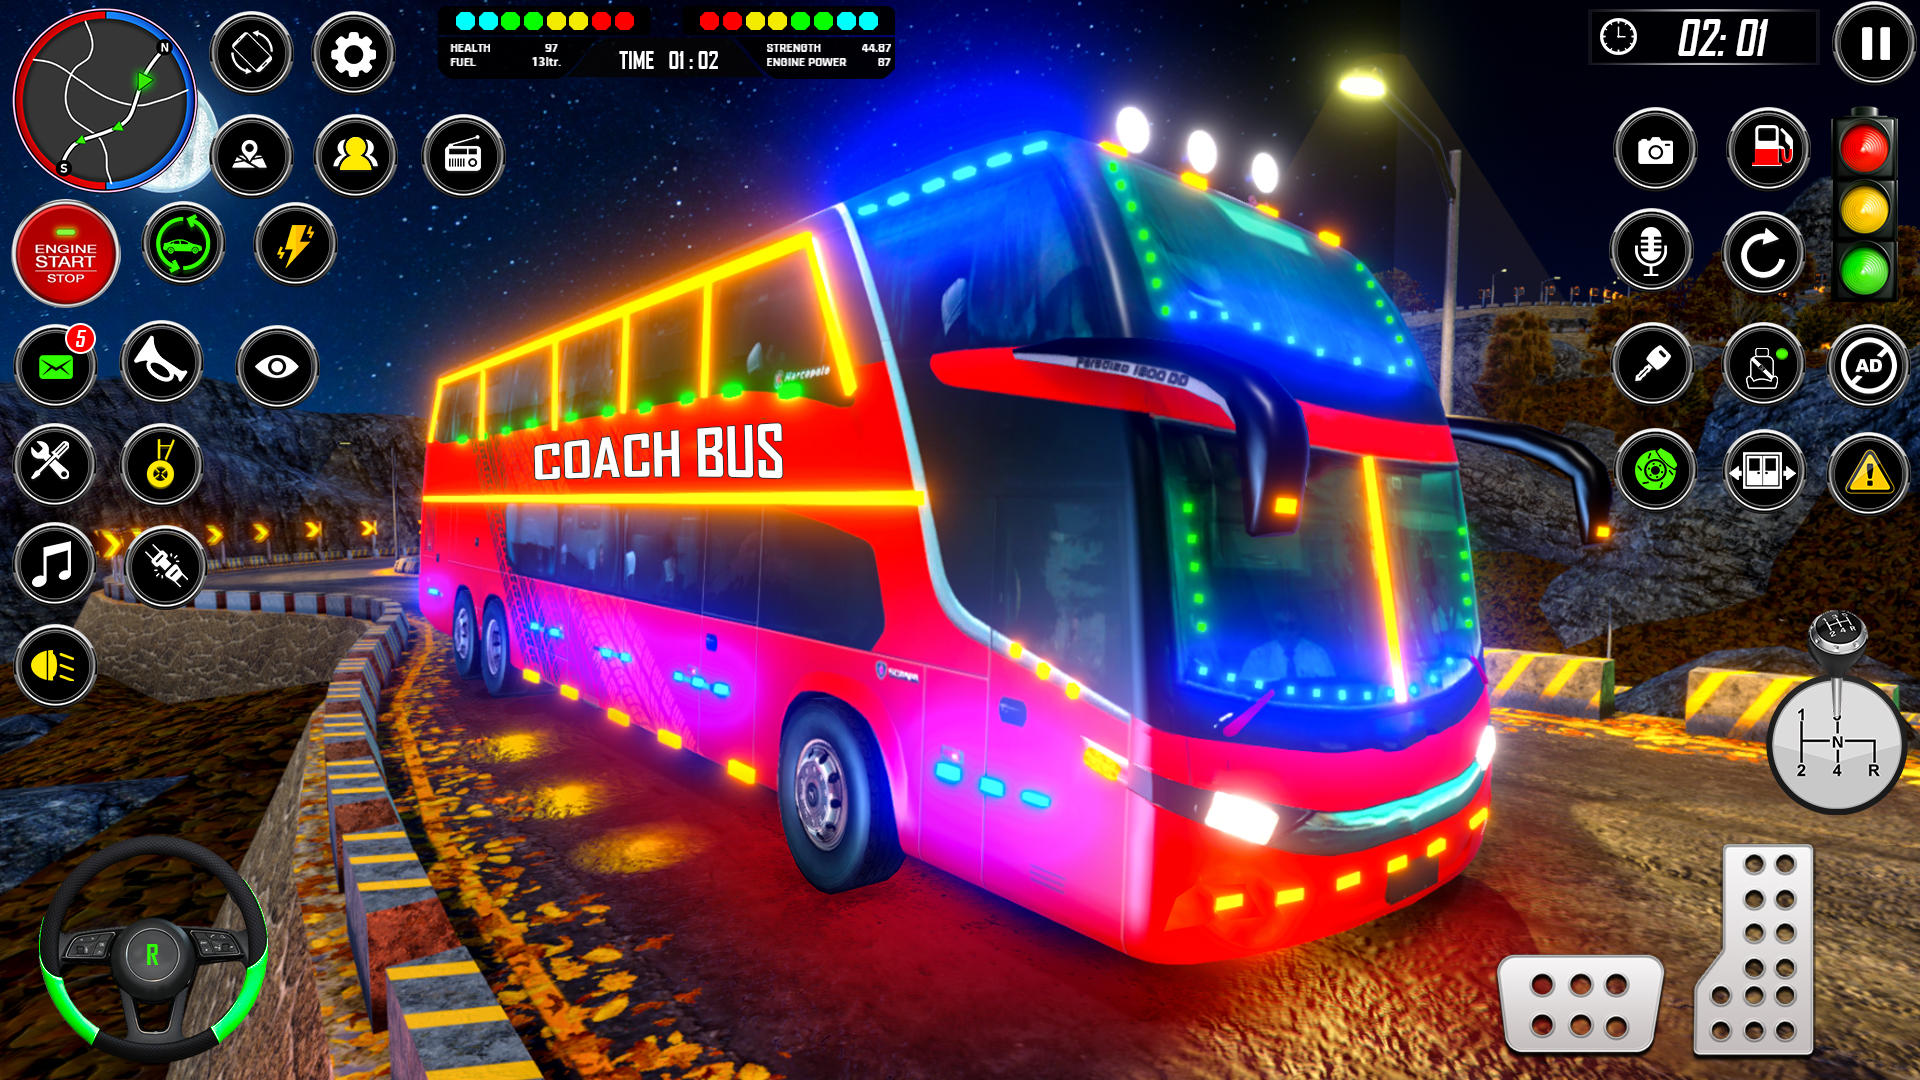 Screenshot 1 of Bussimulator: Busspiele 3.6